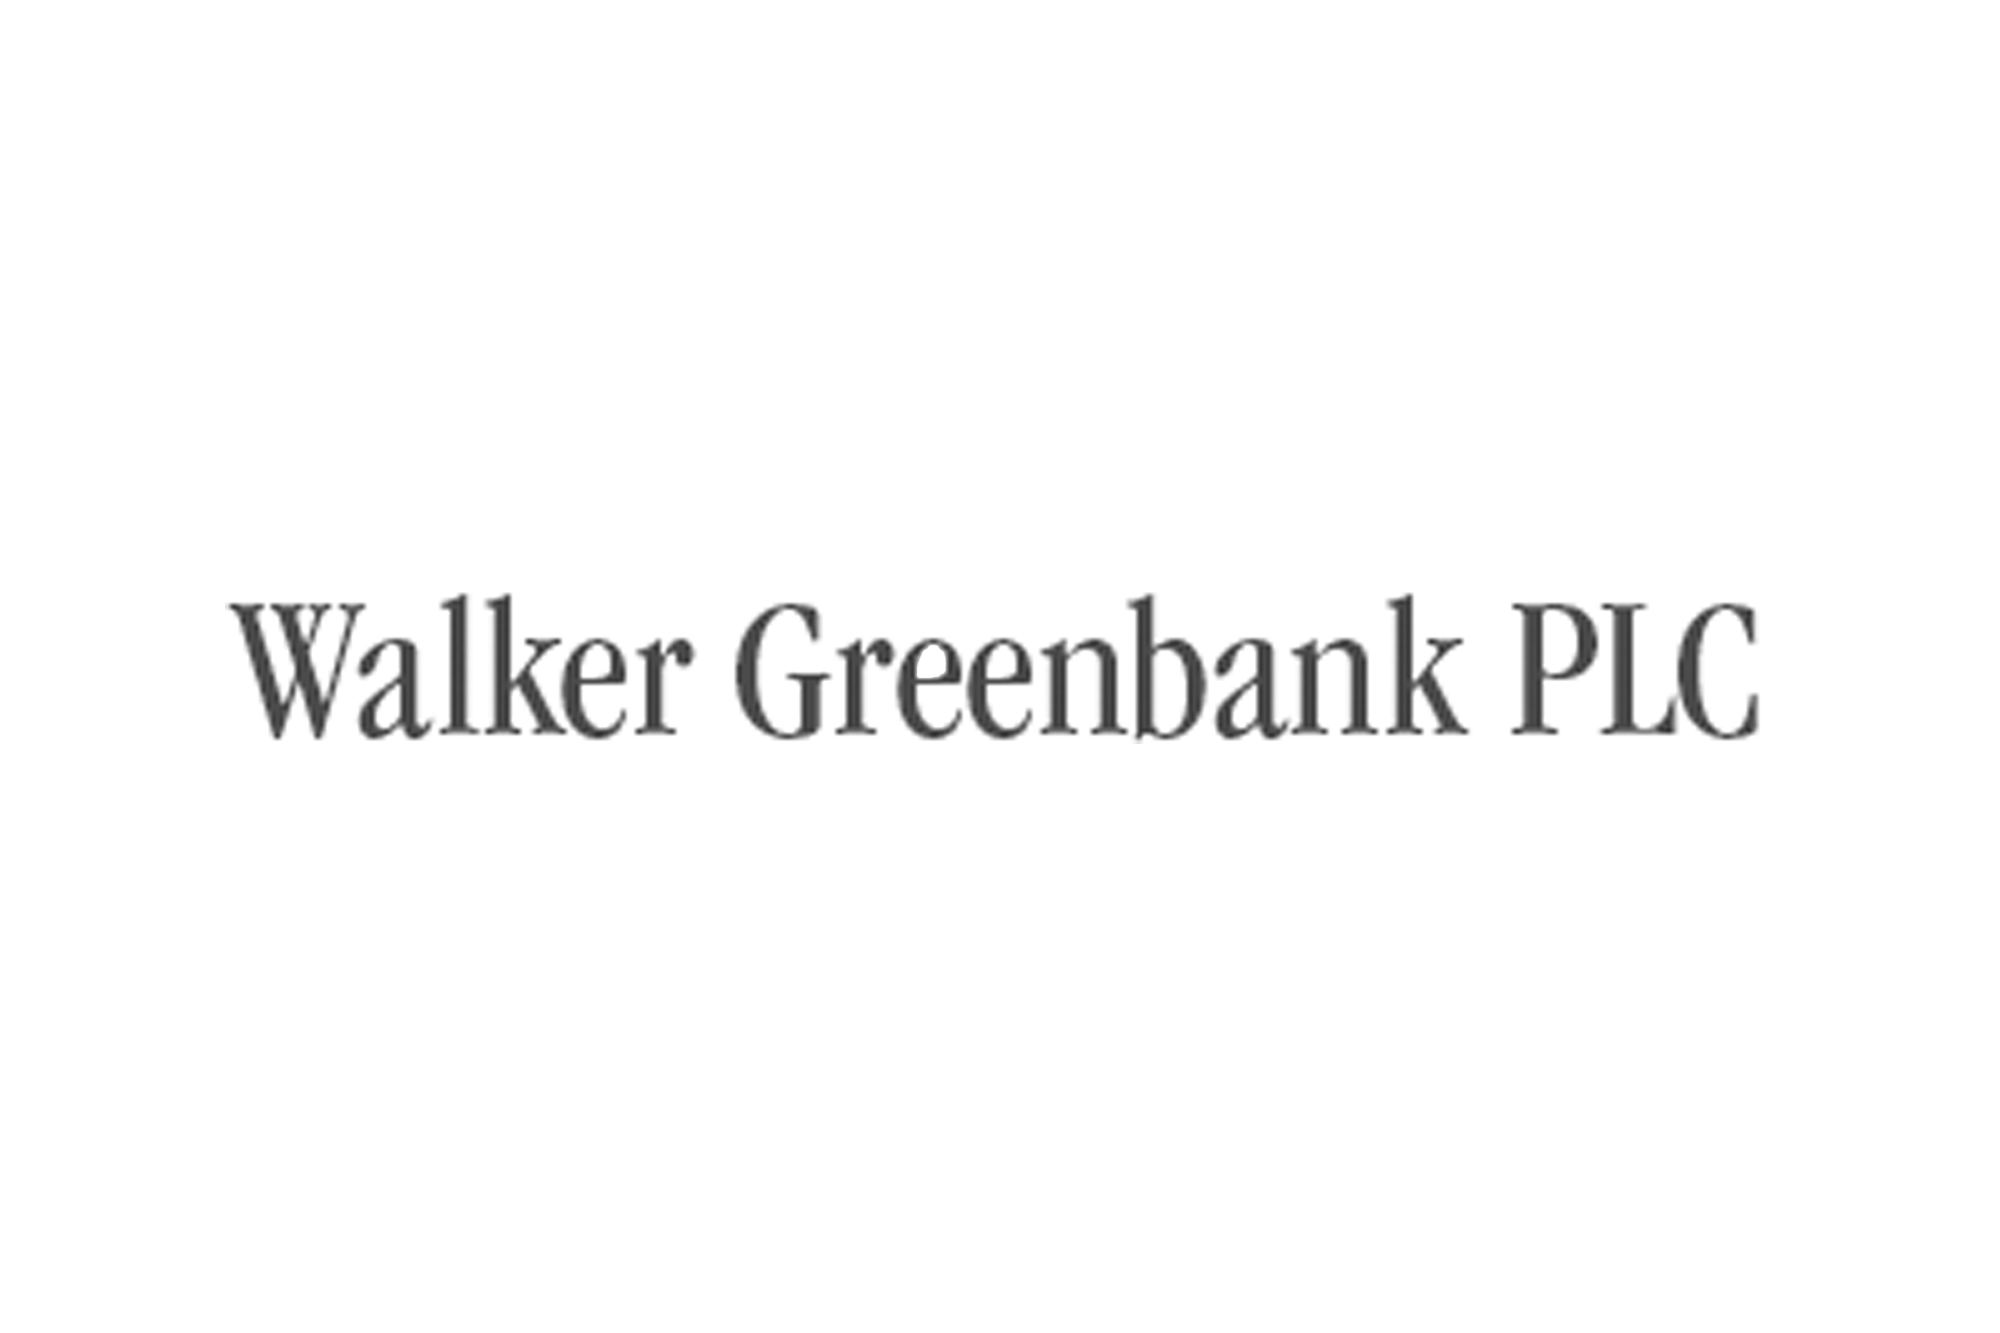 Walker Greenbank plc